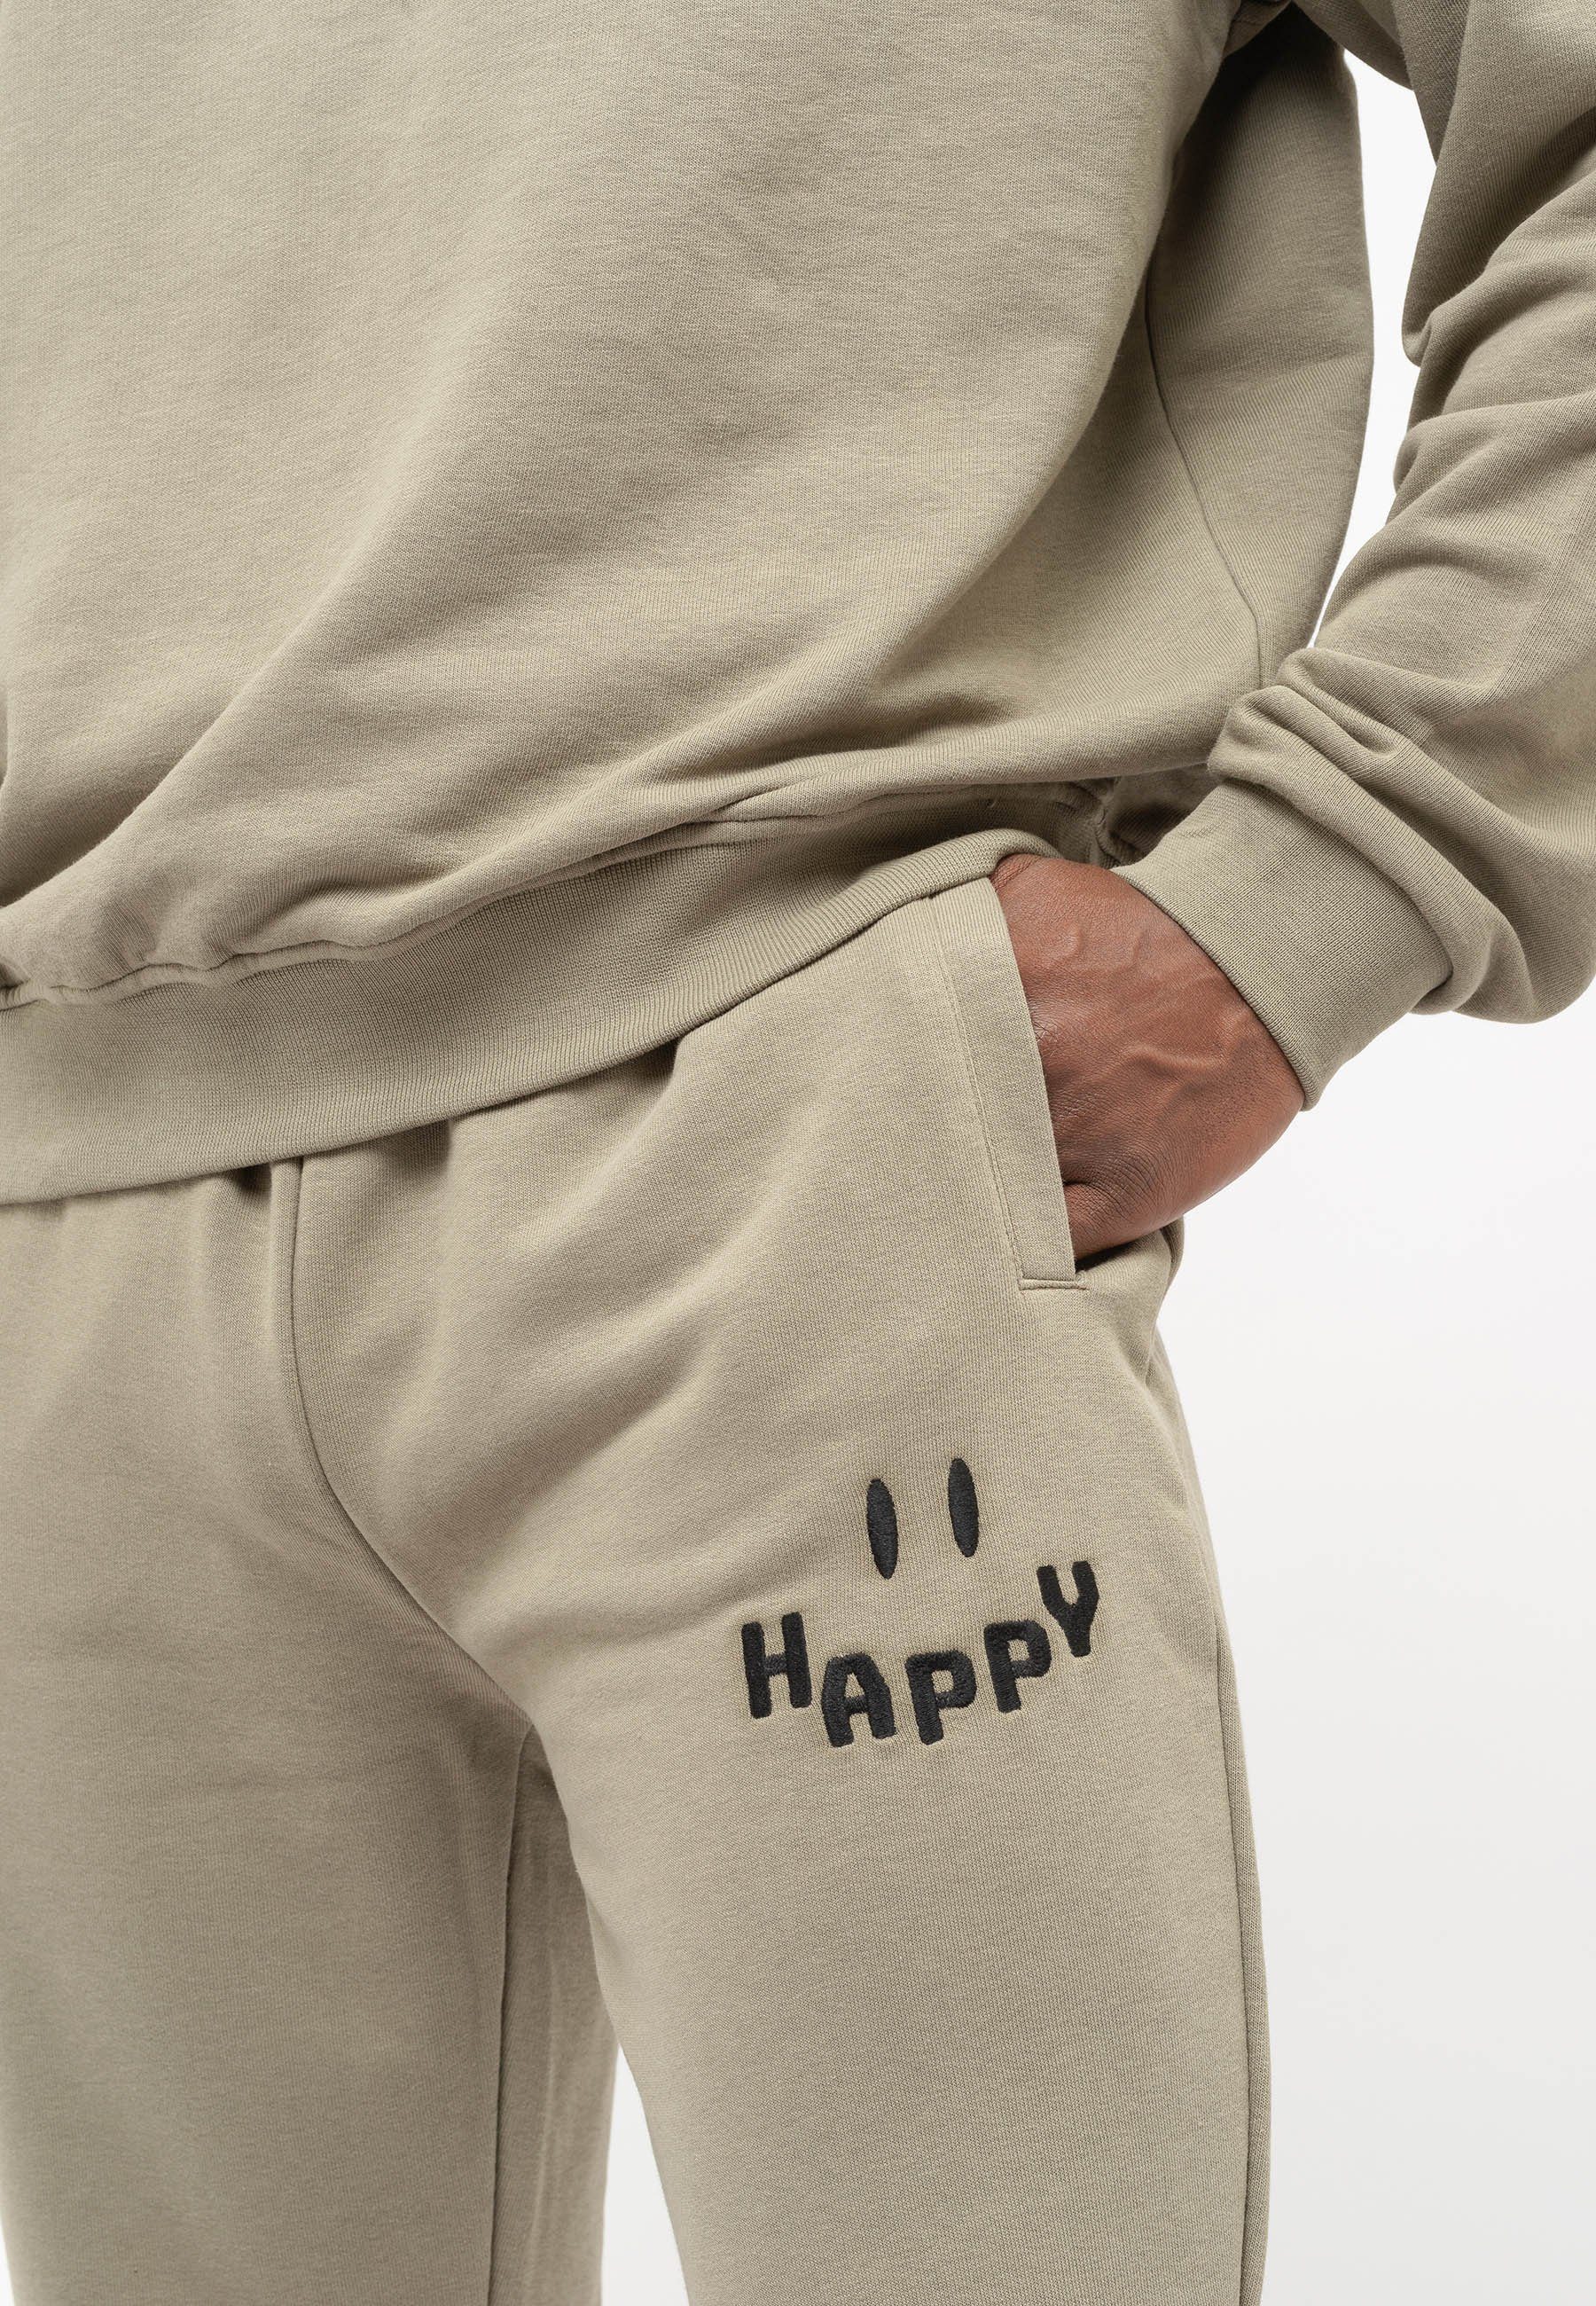 sportivem Oversize Freizeitanzug Happy Print Sweatshirt, Barron Design Sport KHAKI mit Mens Tom